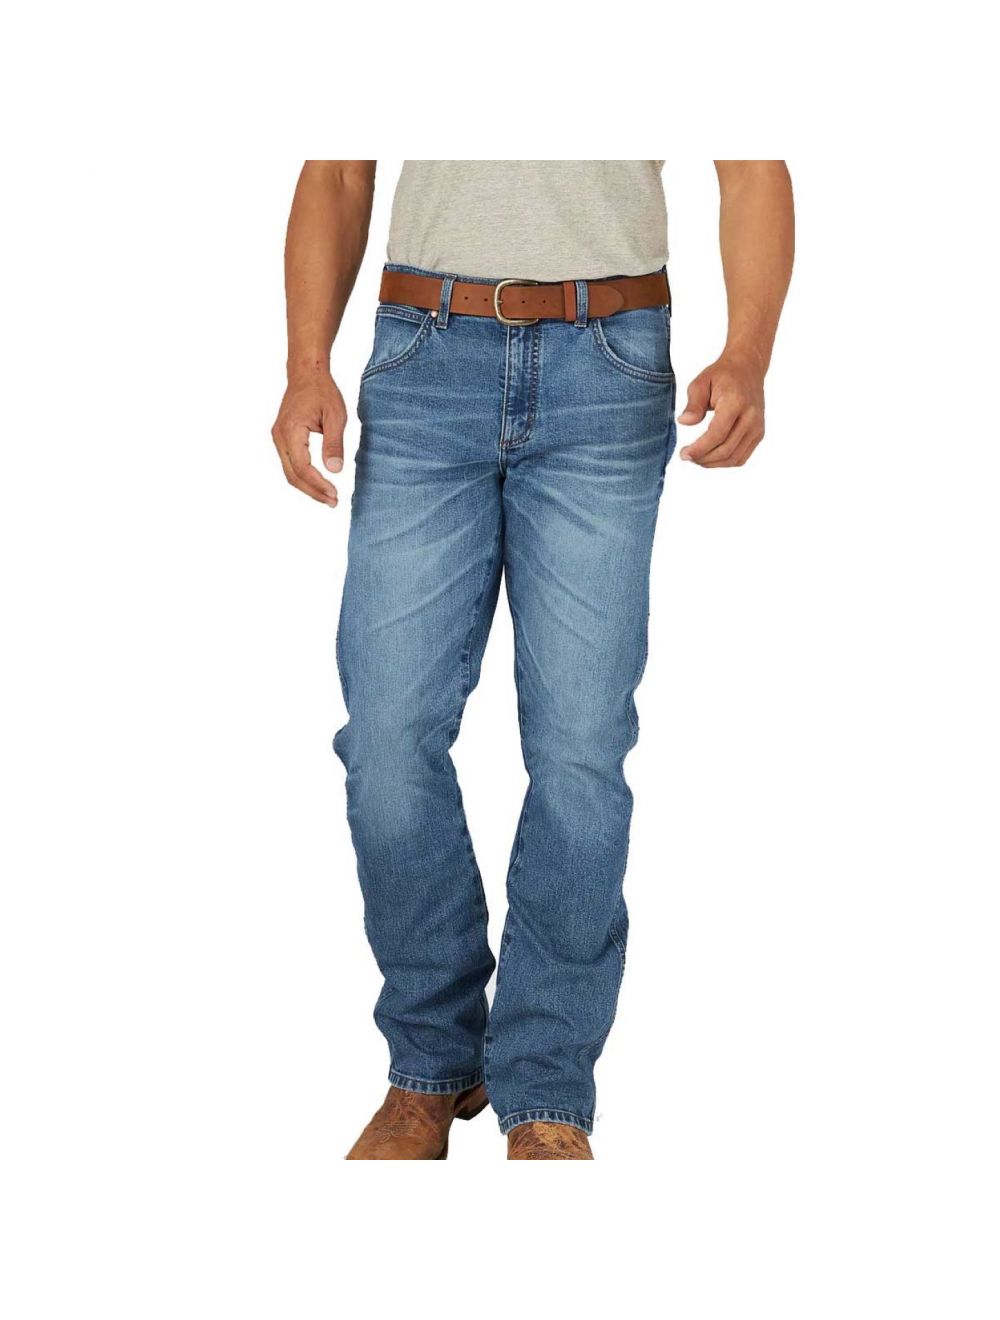 Wrangler Men's Retro Slim Fit Boot Cut Green Jeans